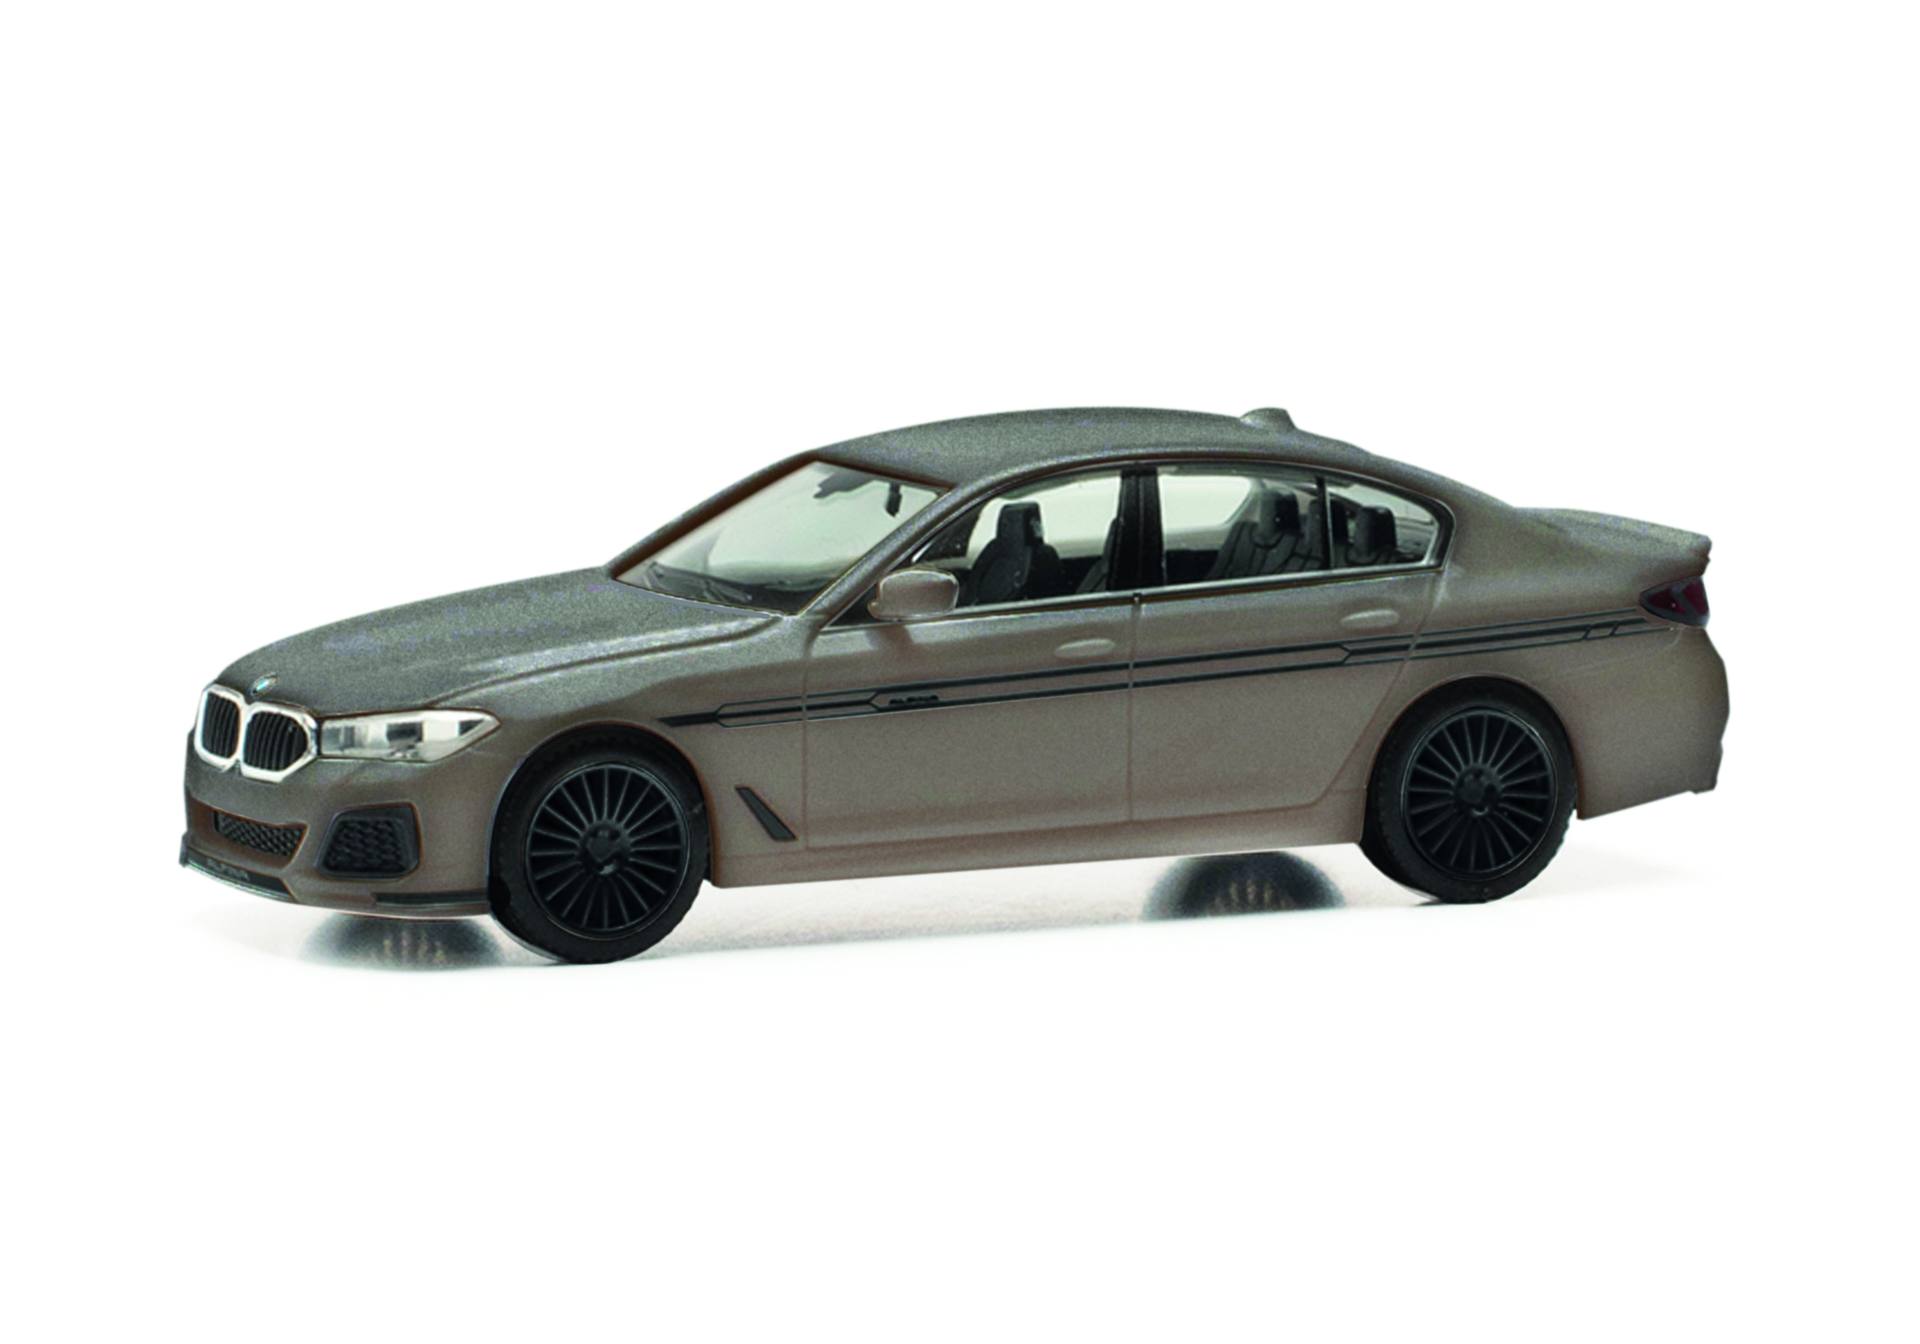 BMW Alpina B5 Limousine, champagner quarz metallic